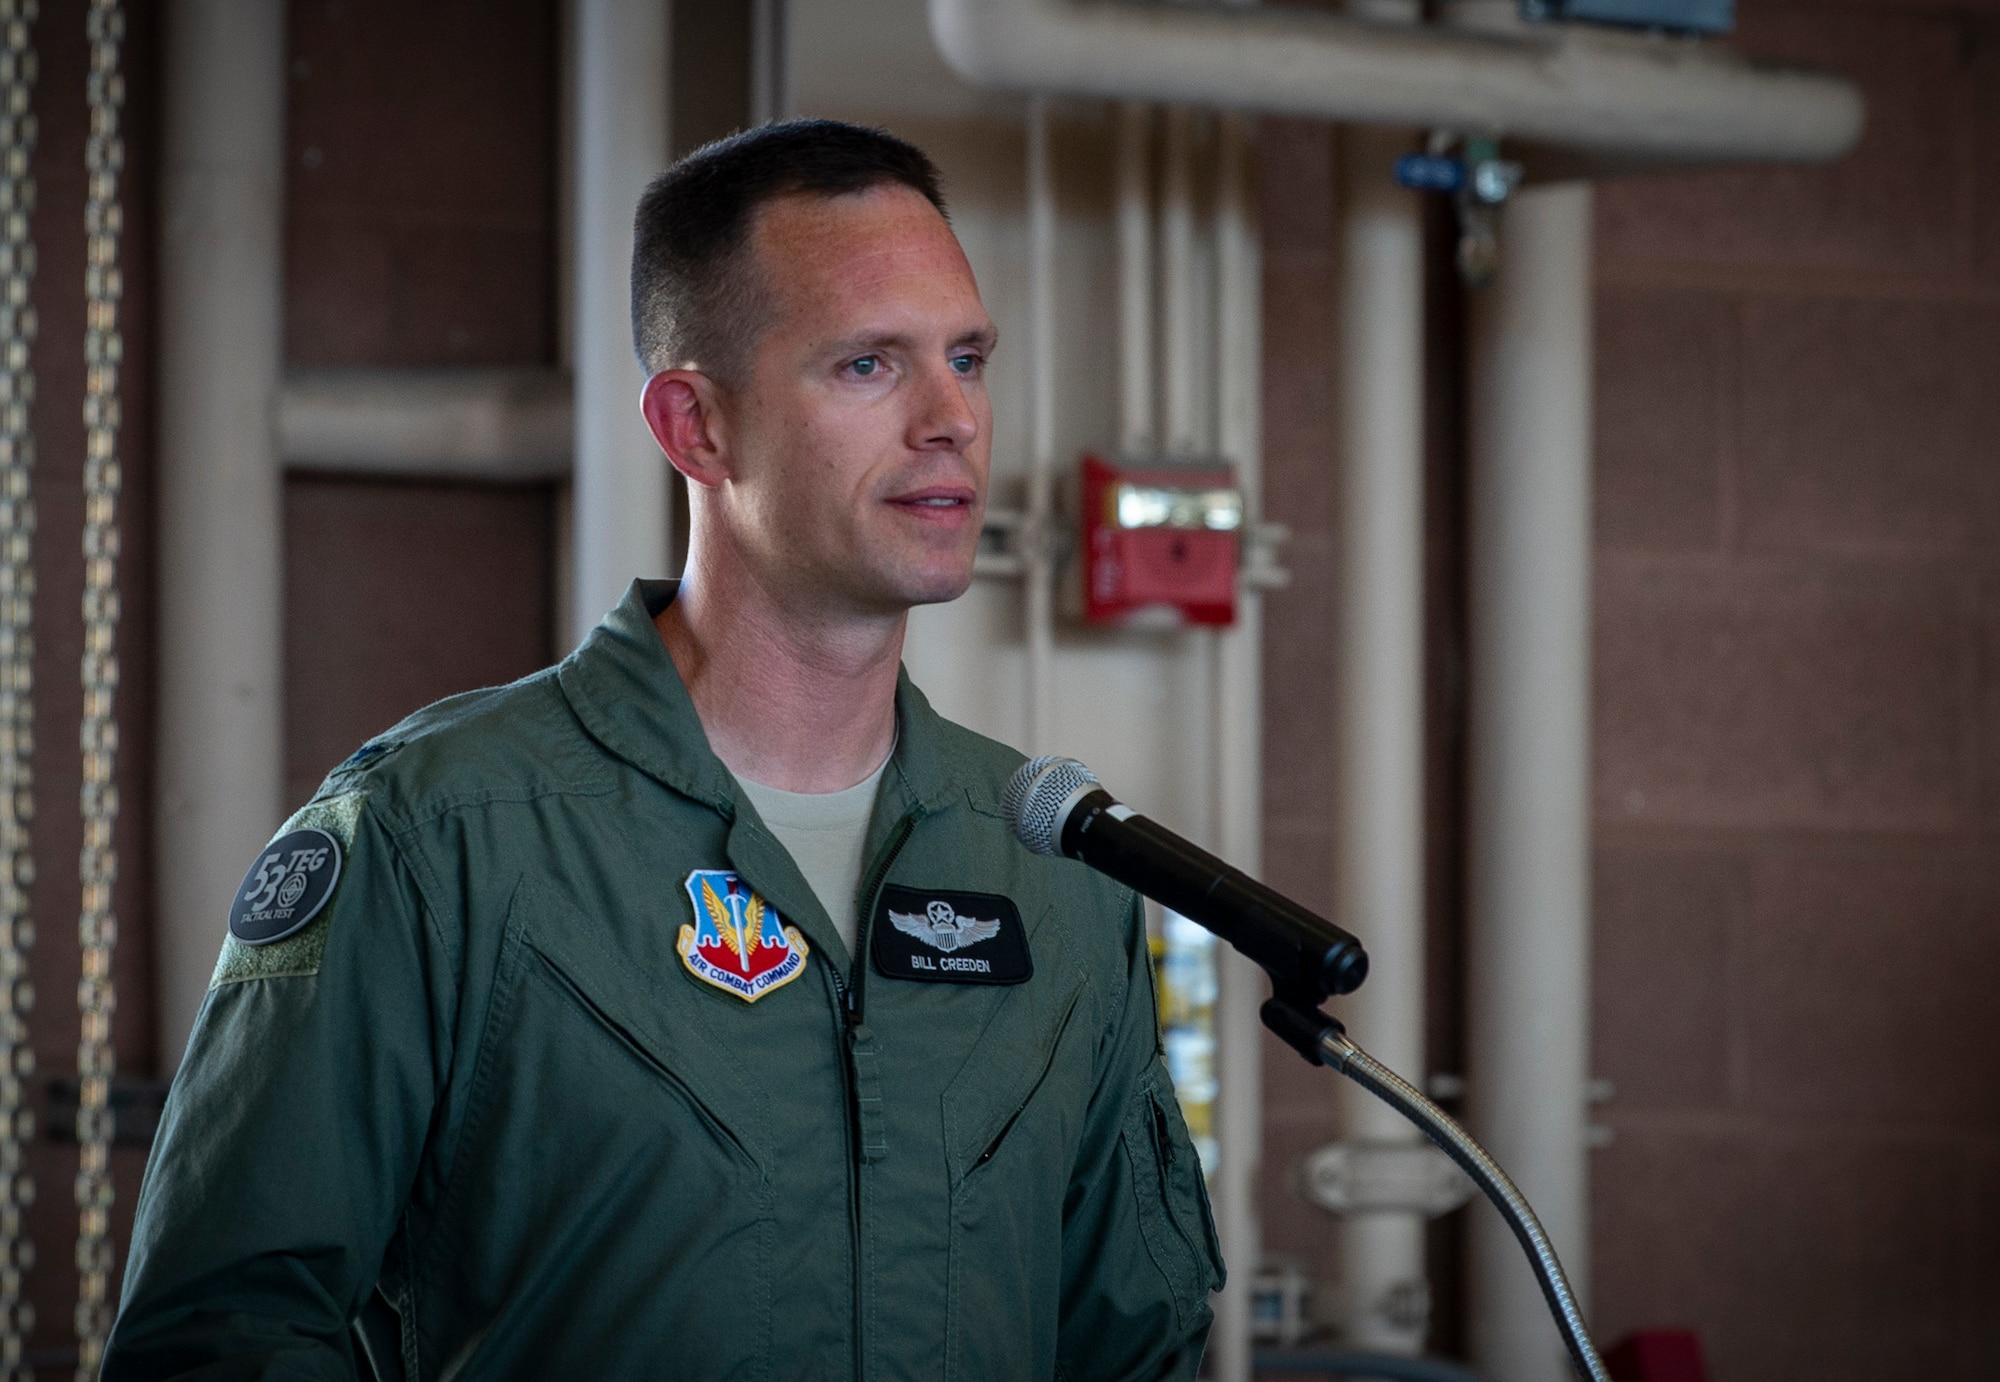 An Airman speaks at a podium.